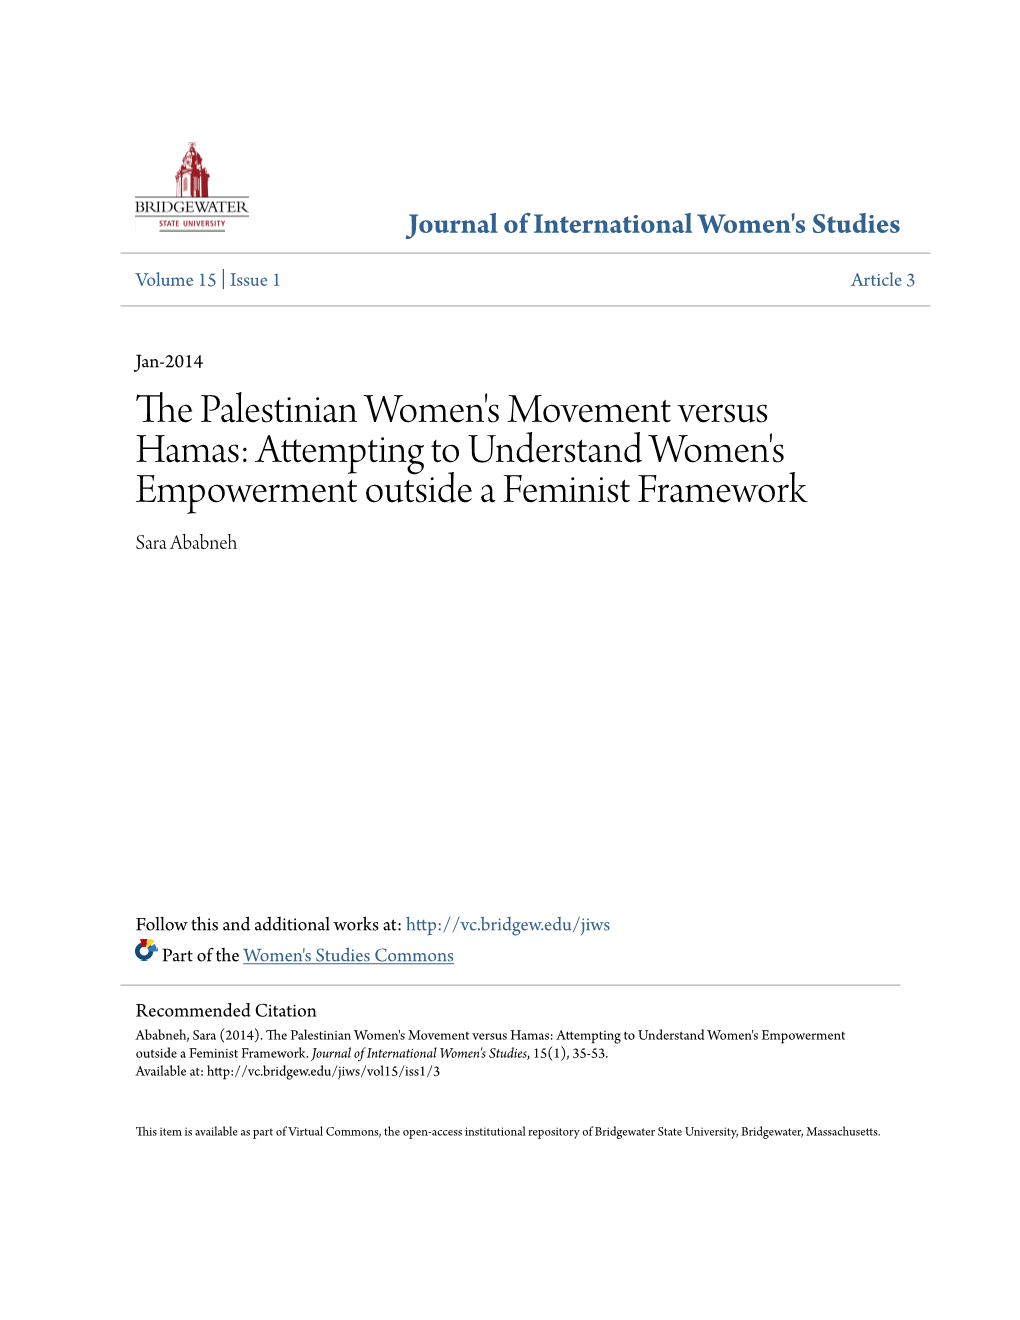 The Palestinian Women's Movement Versus Hamas